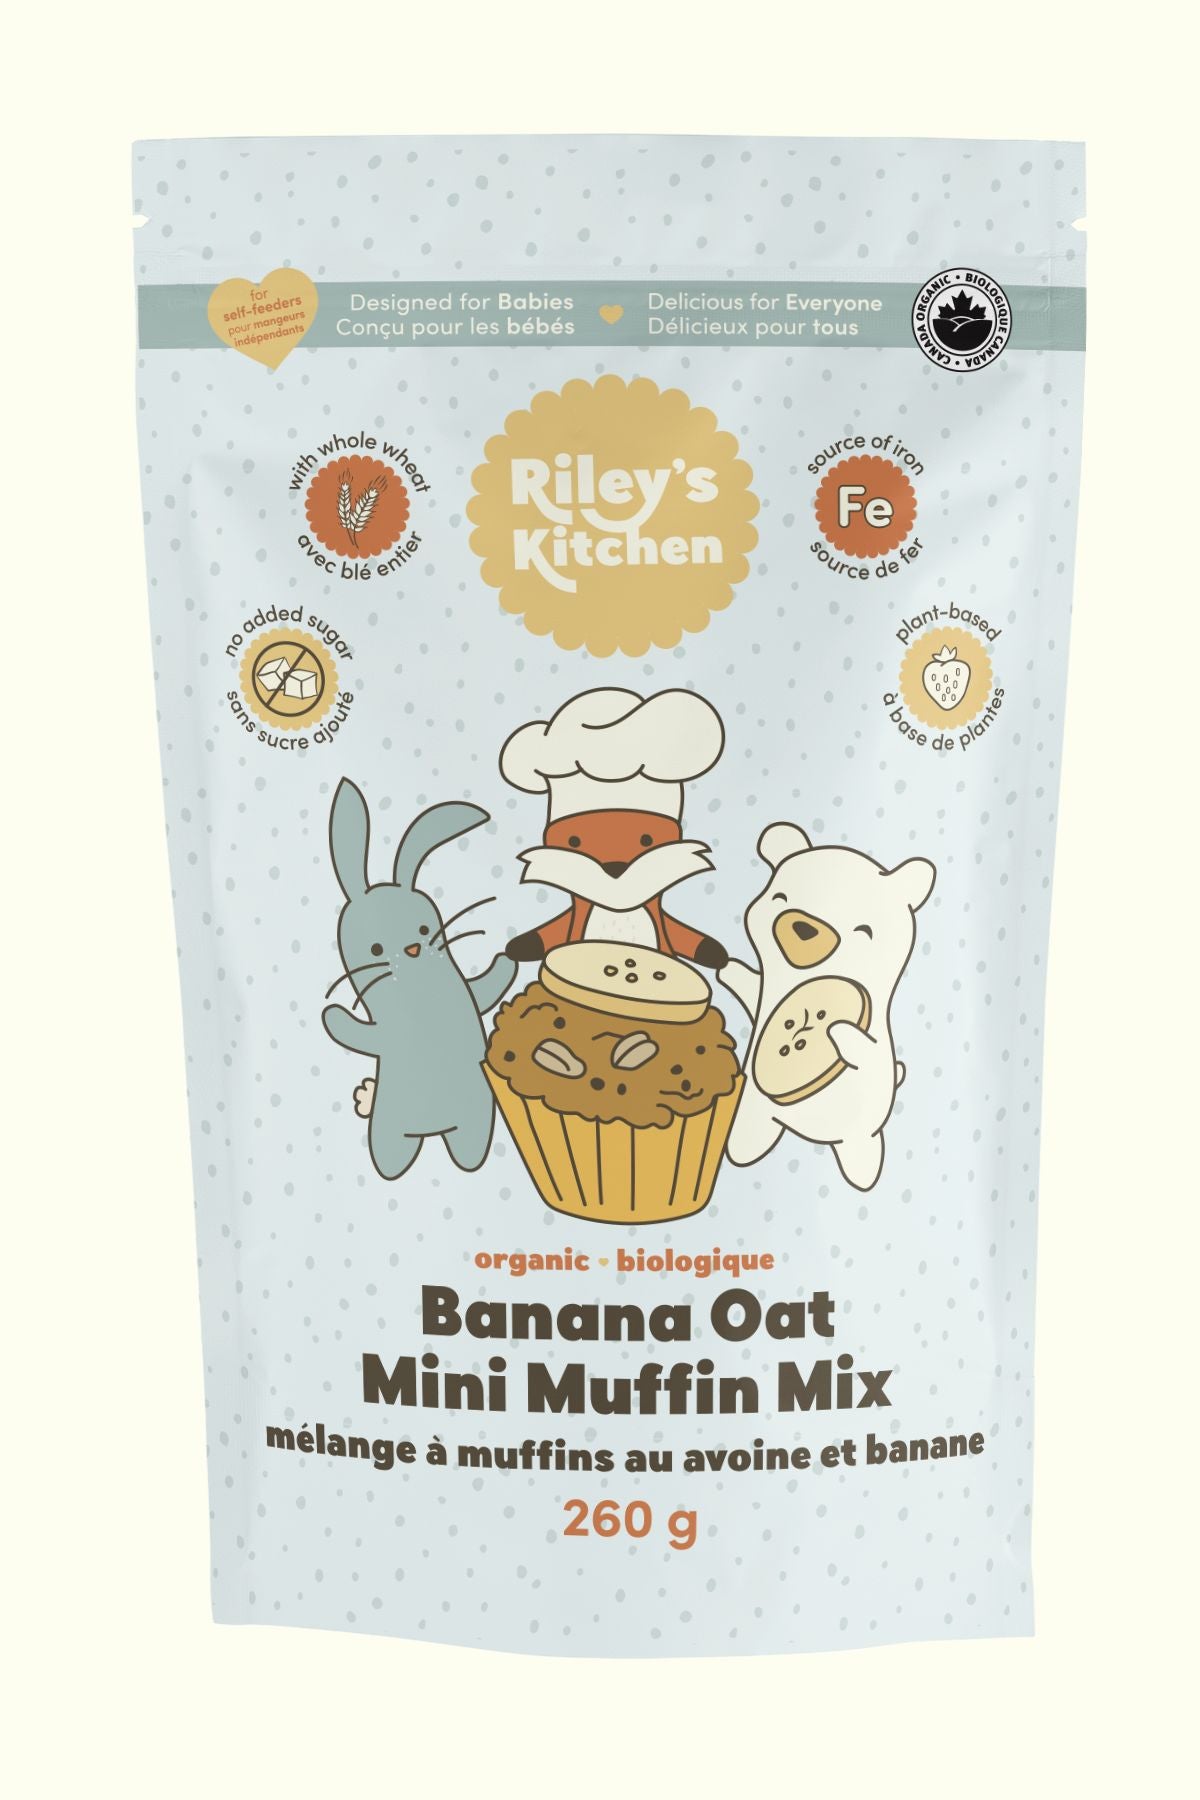 banana Oat Mini Muffin Mix head on